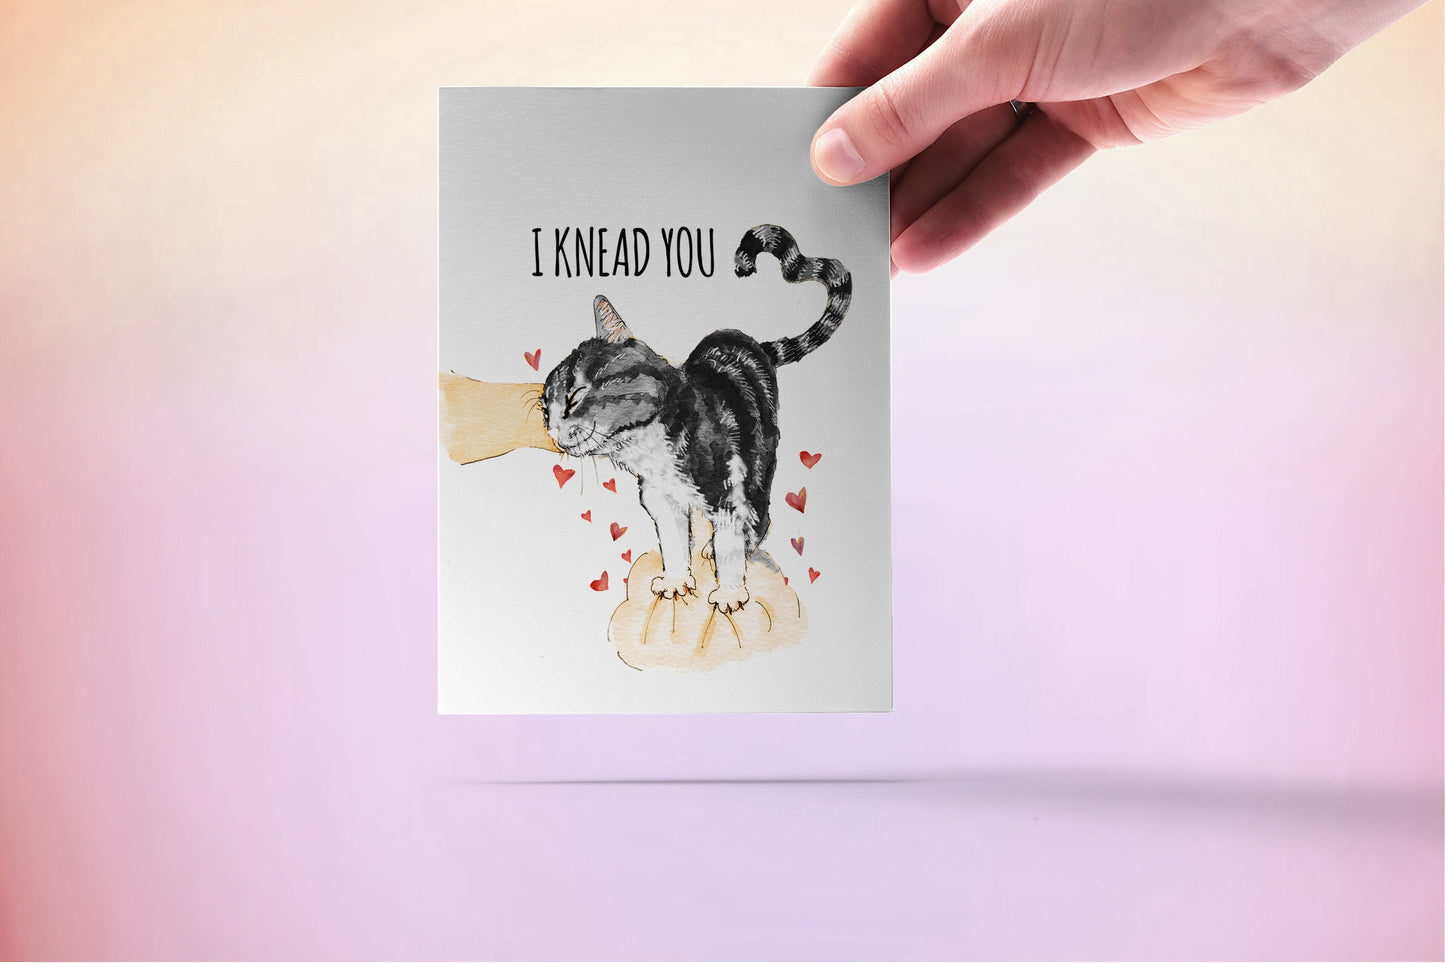 Cat Anniversary Card For Boyfriend - I Knead You I Love Card For Husband